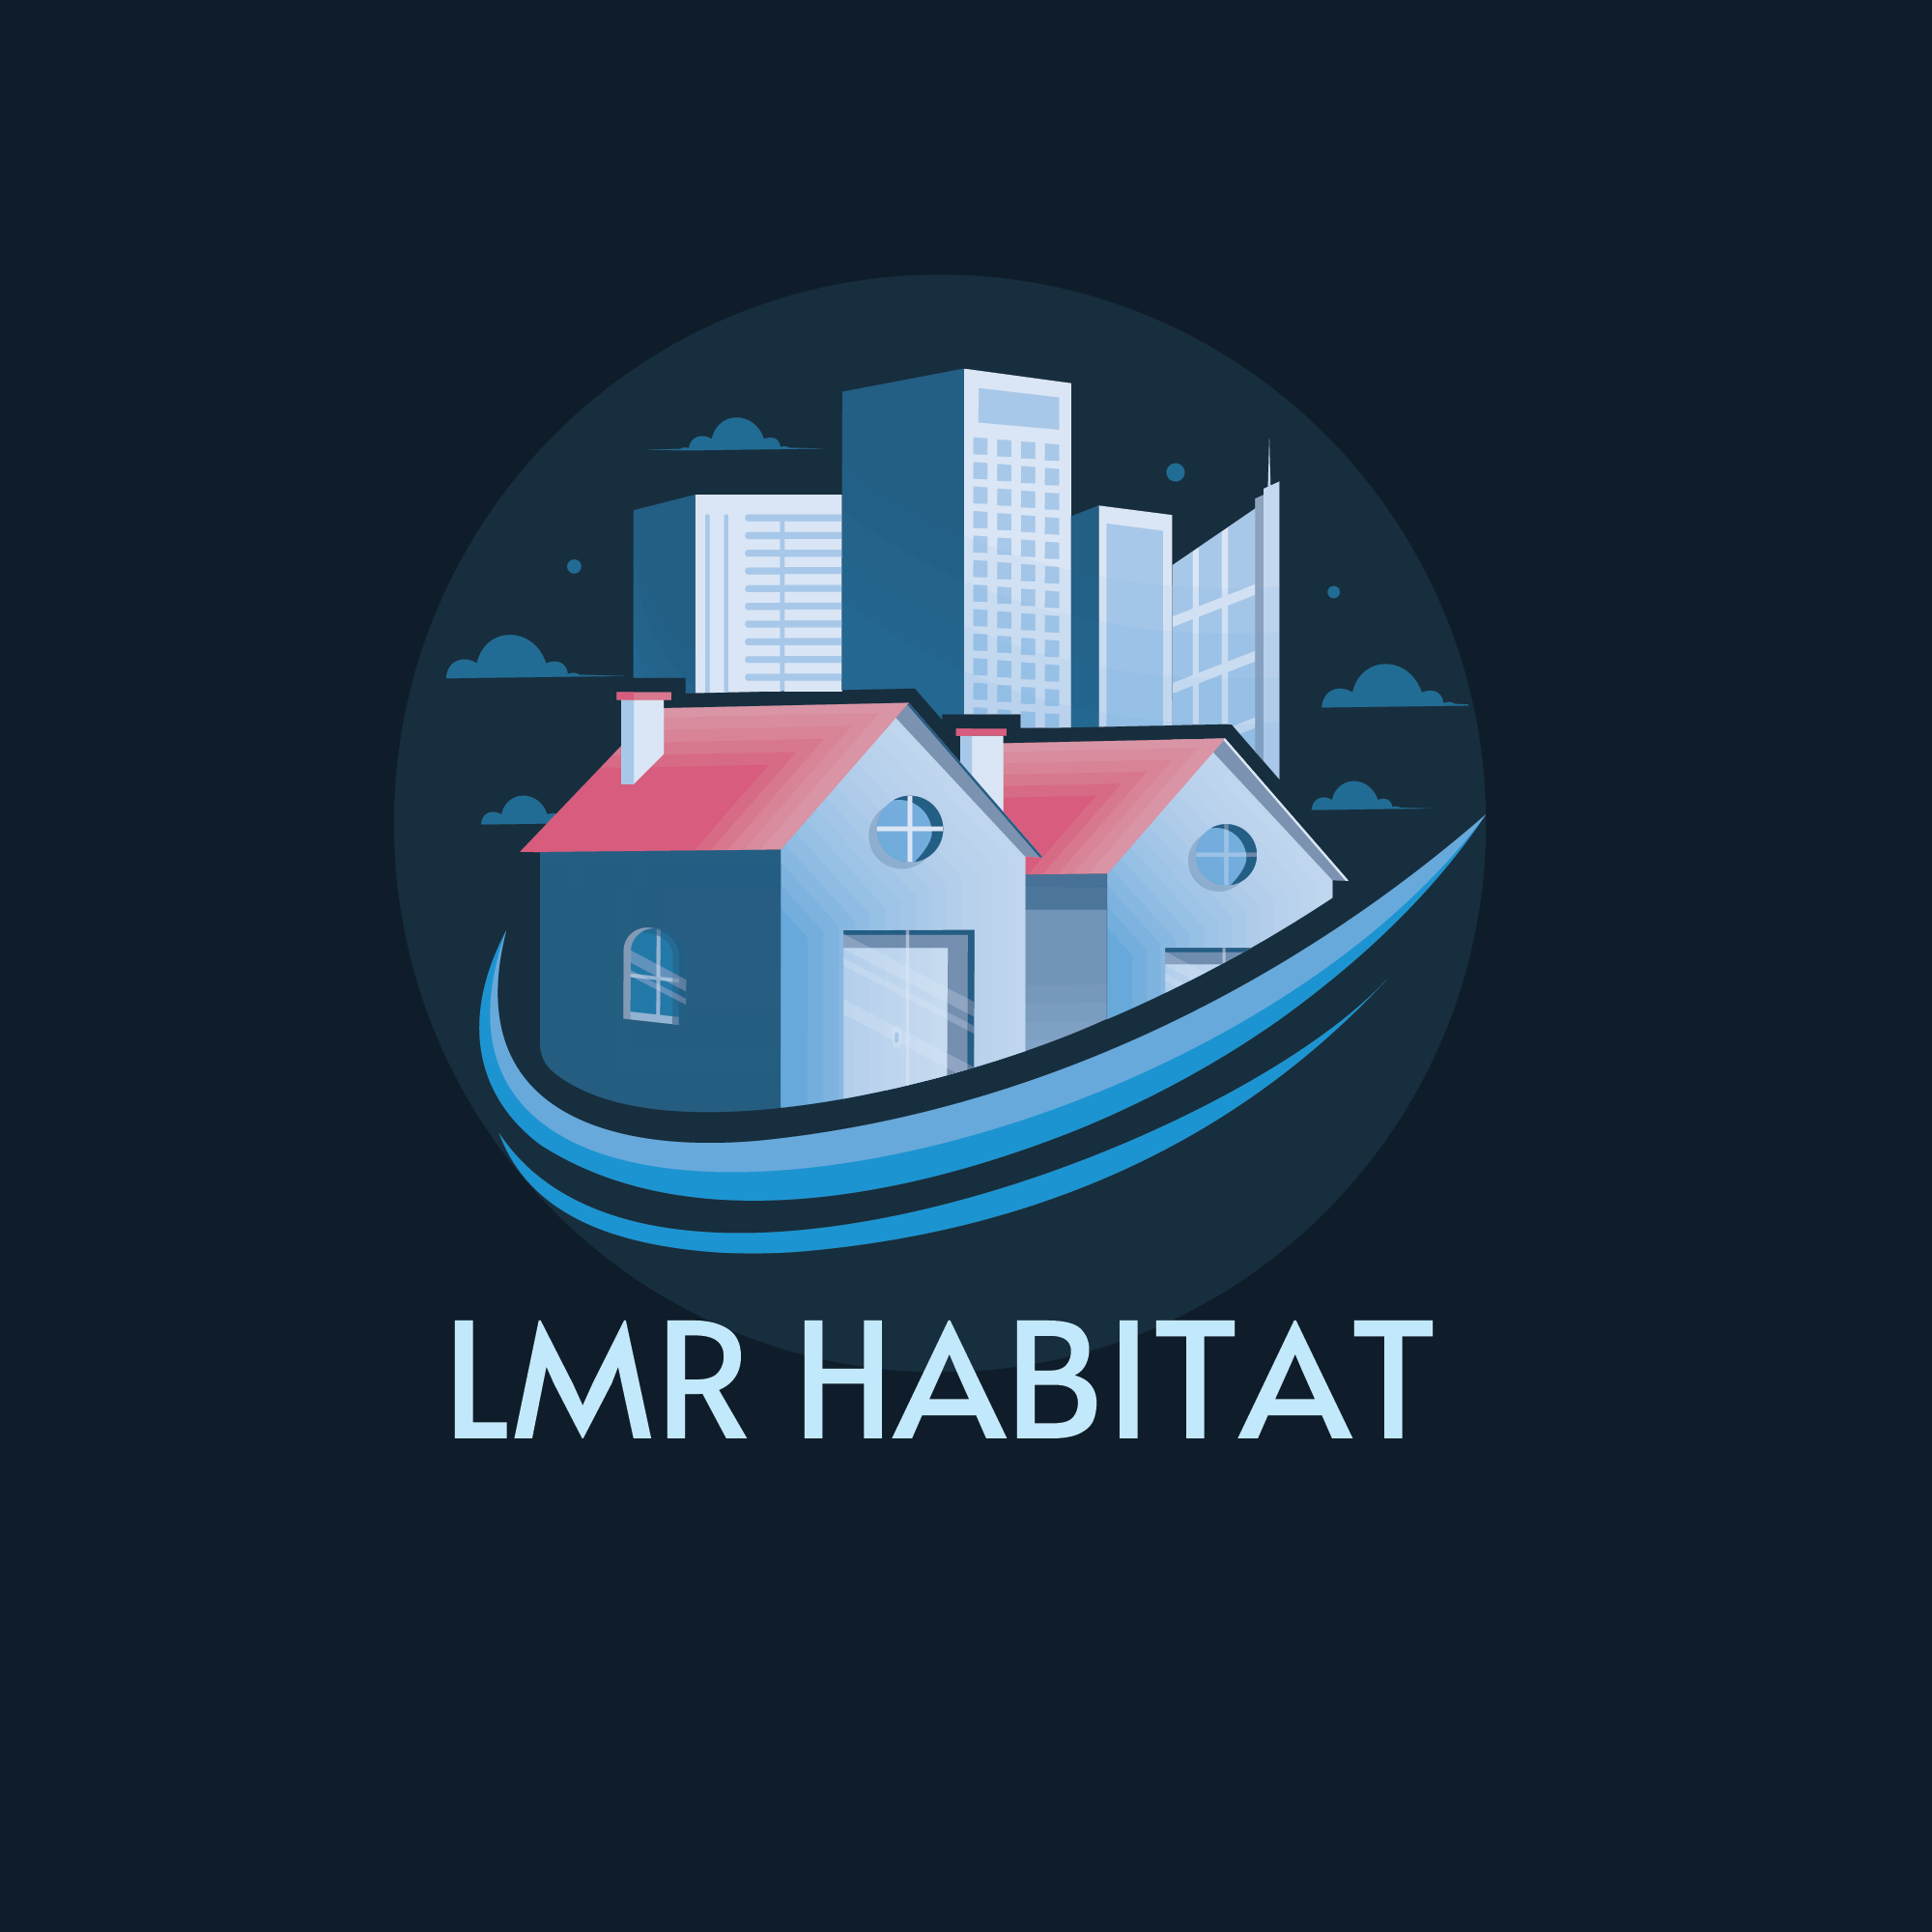 LMR Habitat